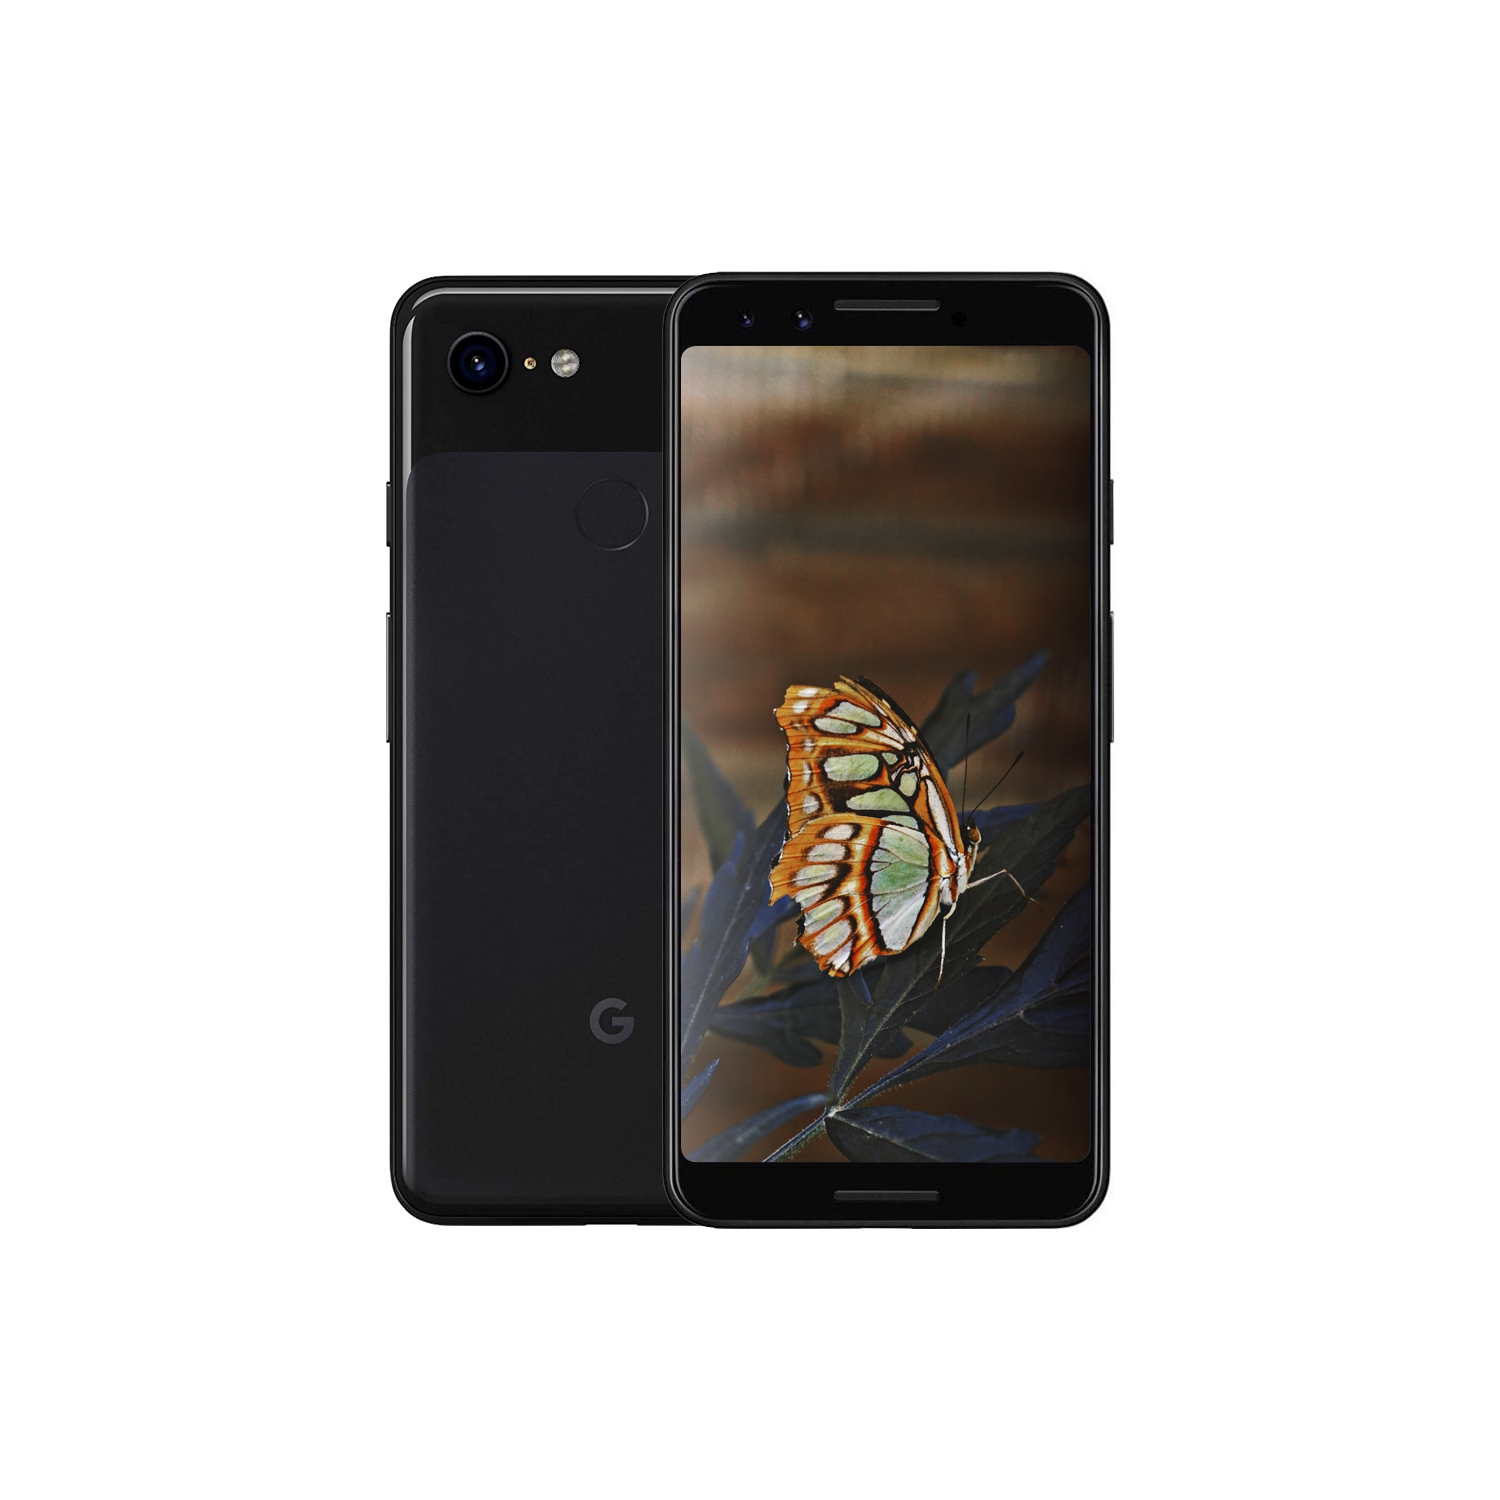 Smartphone Google Pixel 3 64GB Unlocked - Black